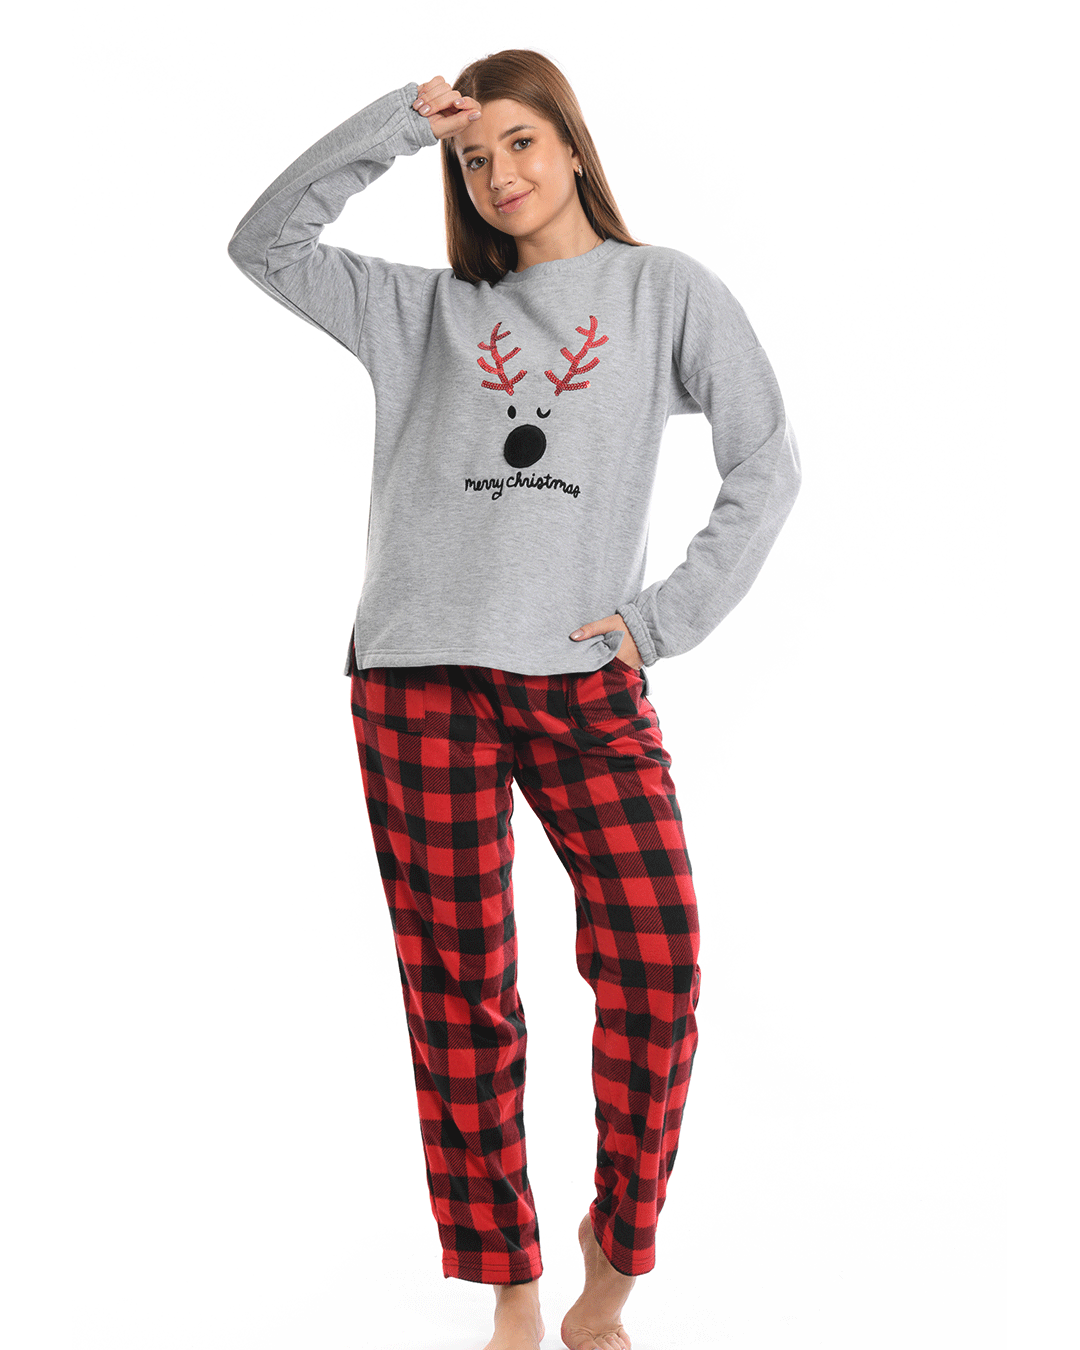 Full Pajama - Checkers Christmas